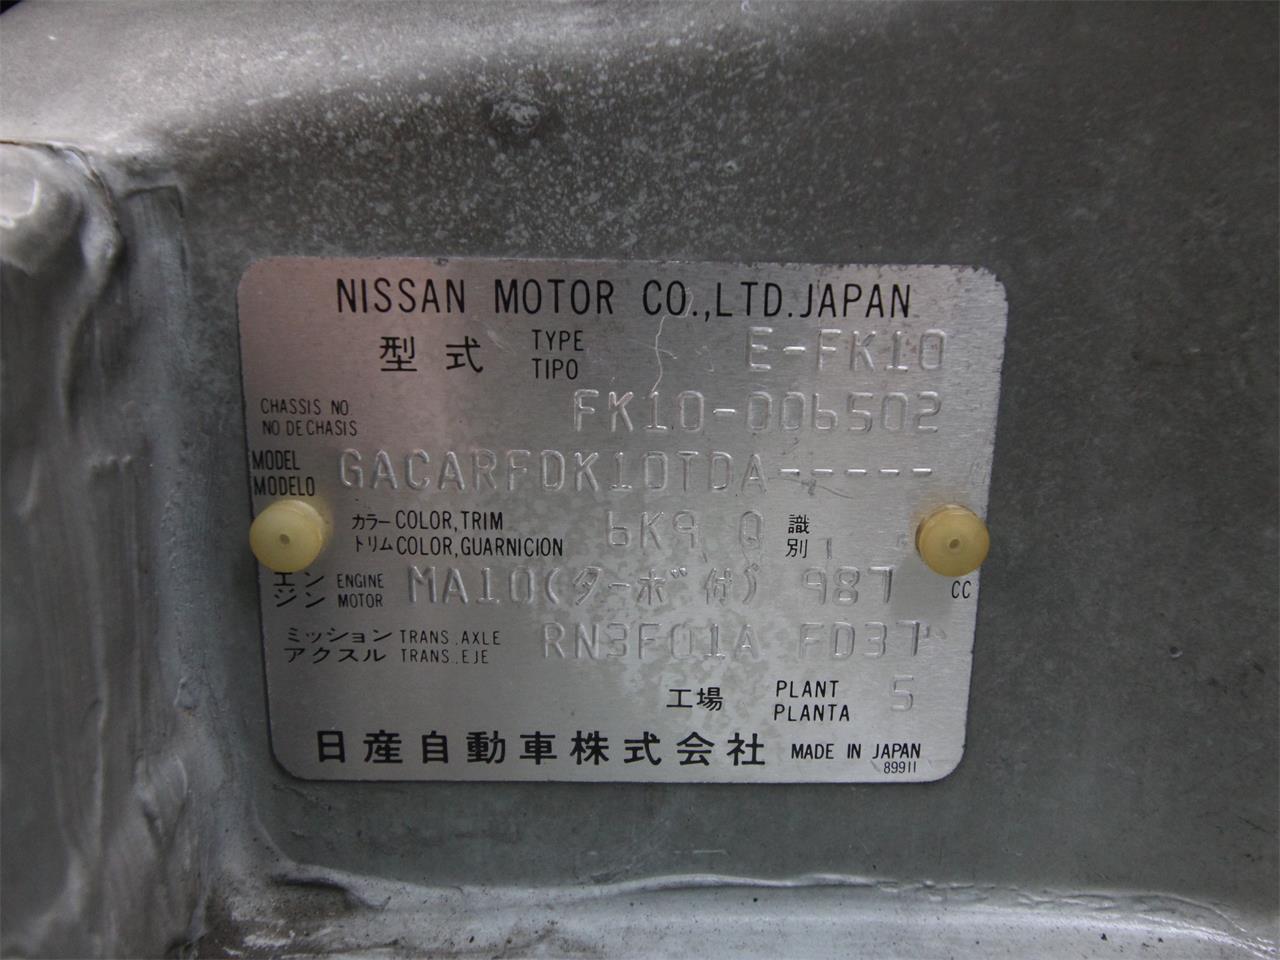 1991 Nissan Figaro for sale in Christiansburg, VA – photo 49